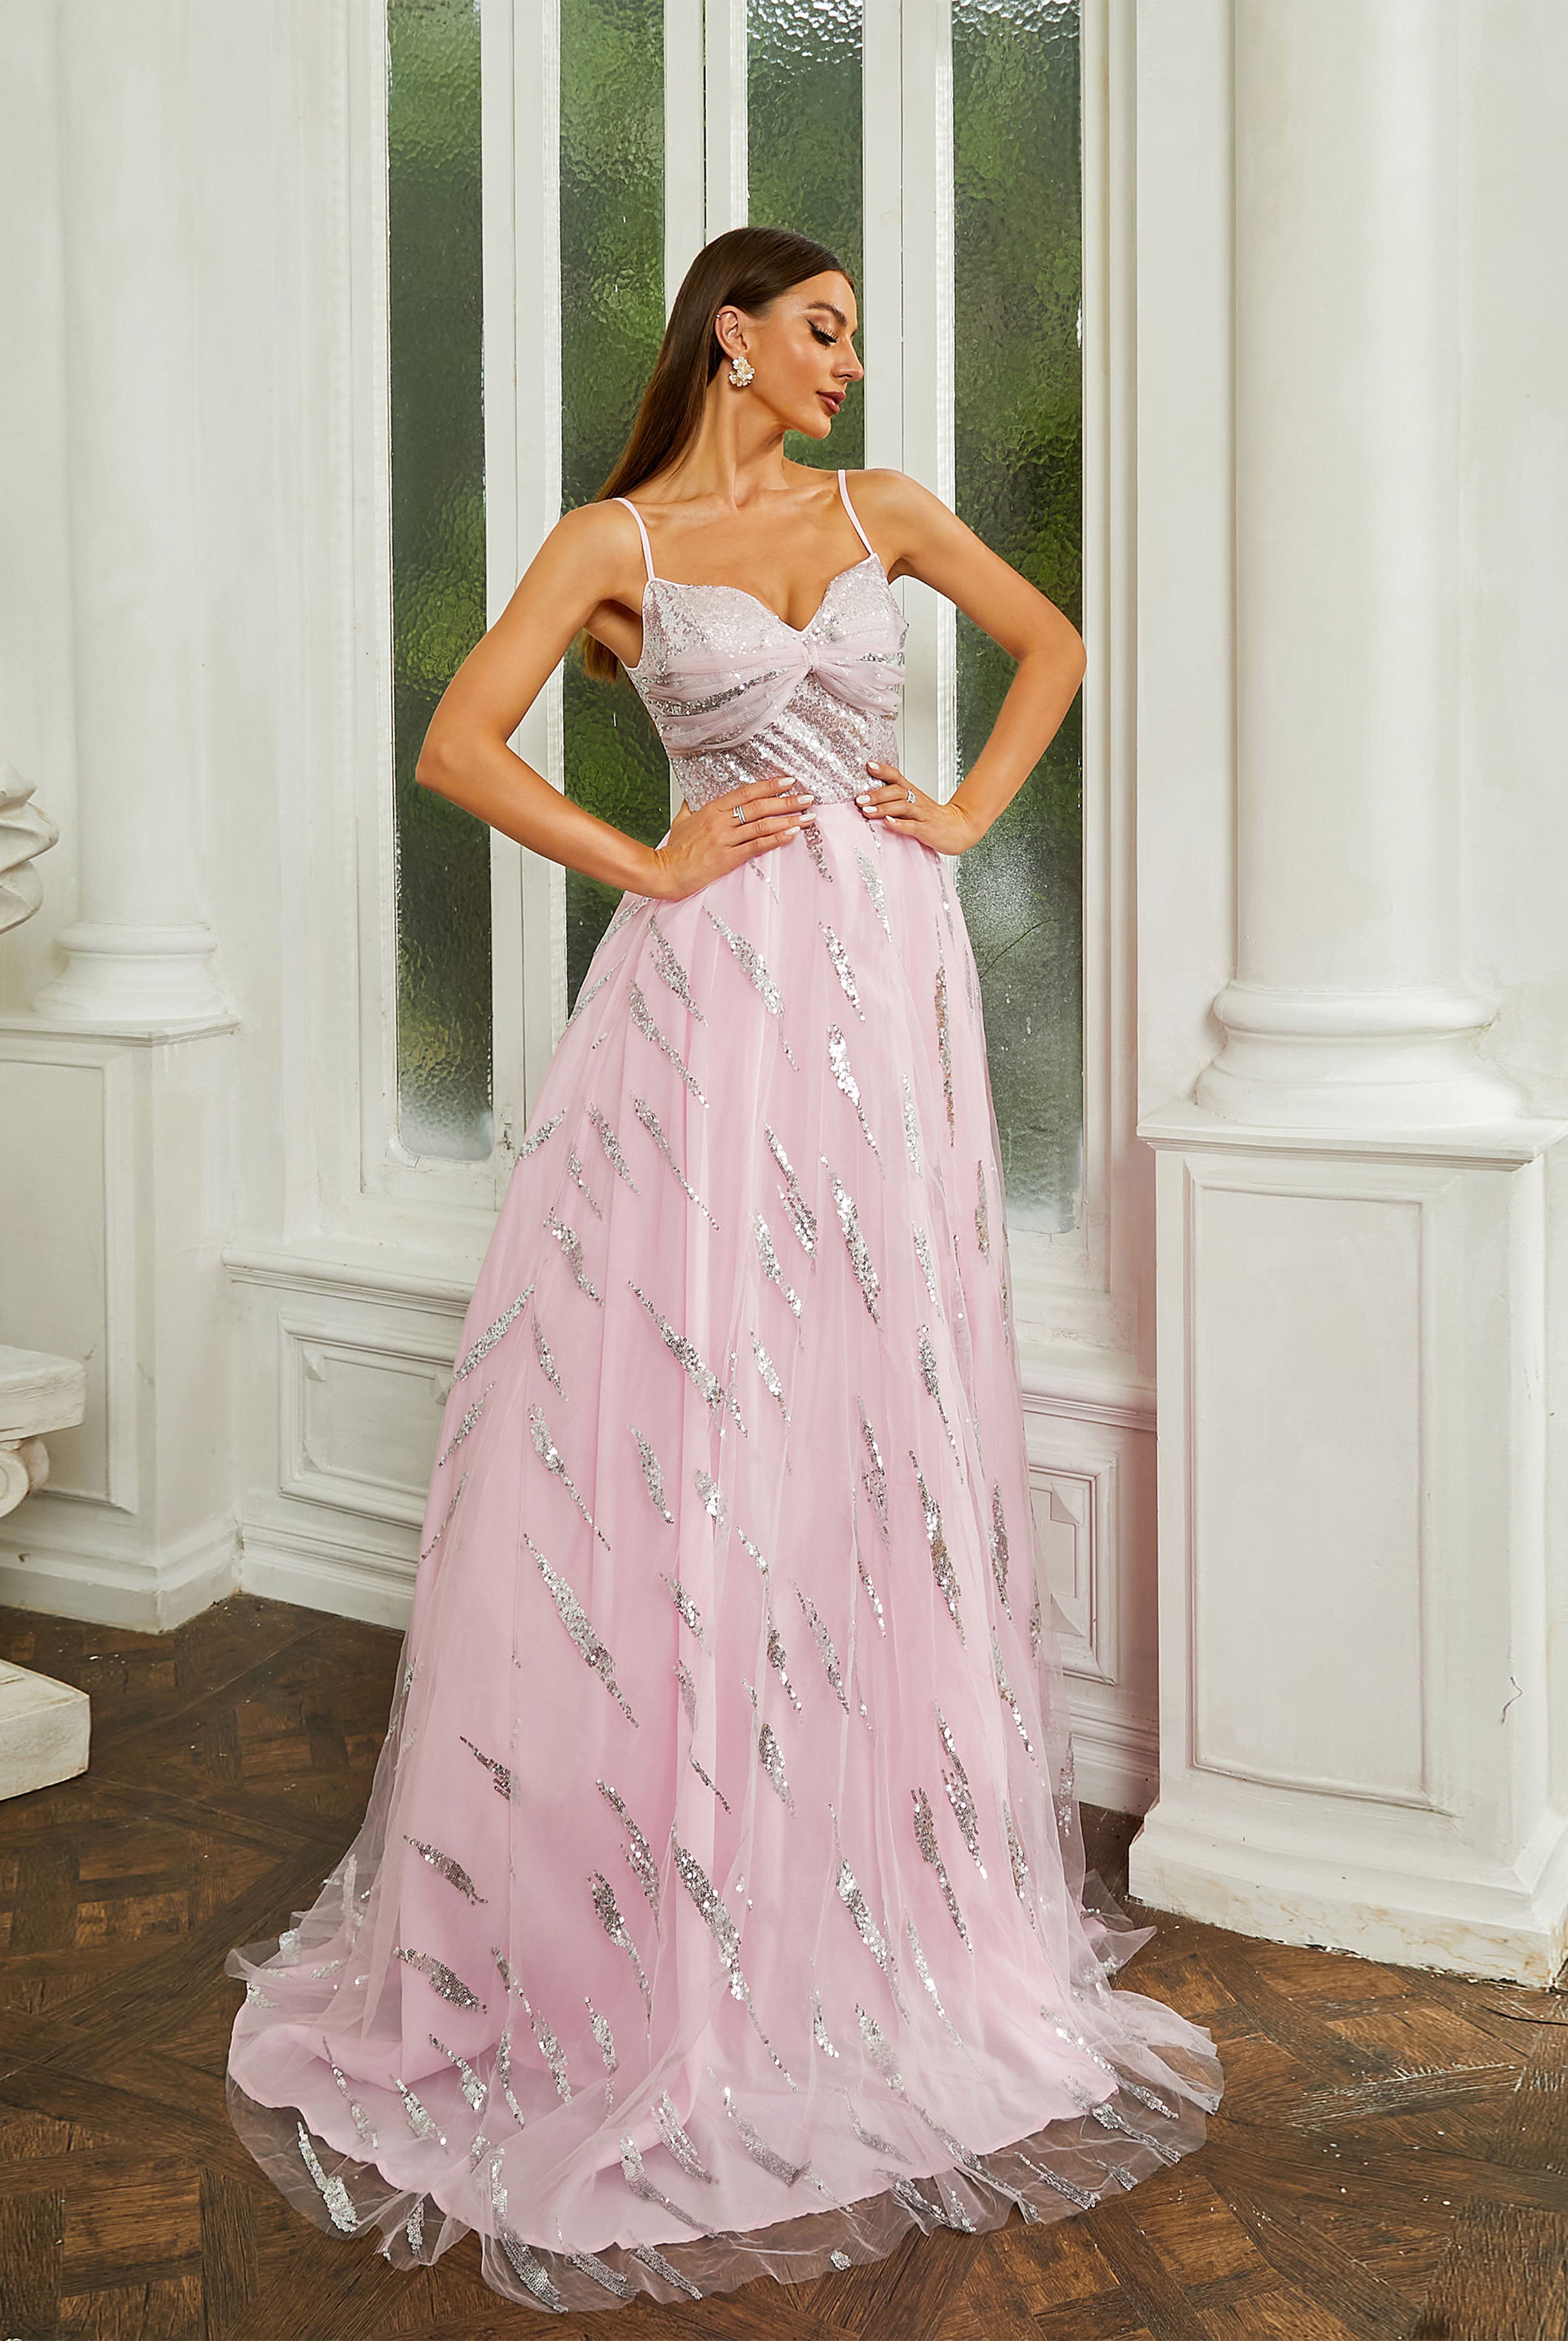 Spaghetti Straps Panel Tulle Sequin Prom Dress M02306